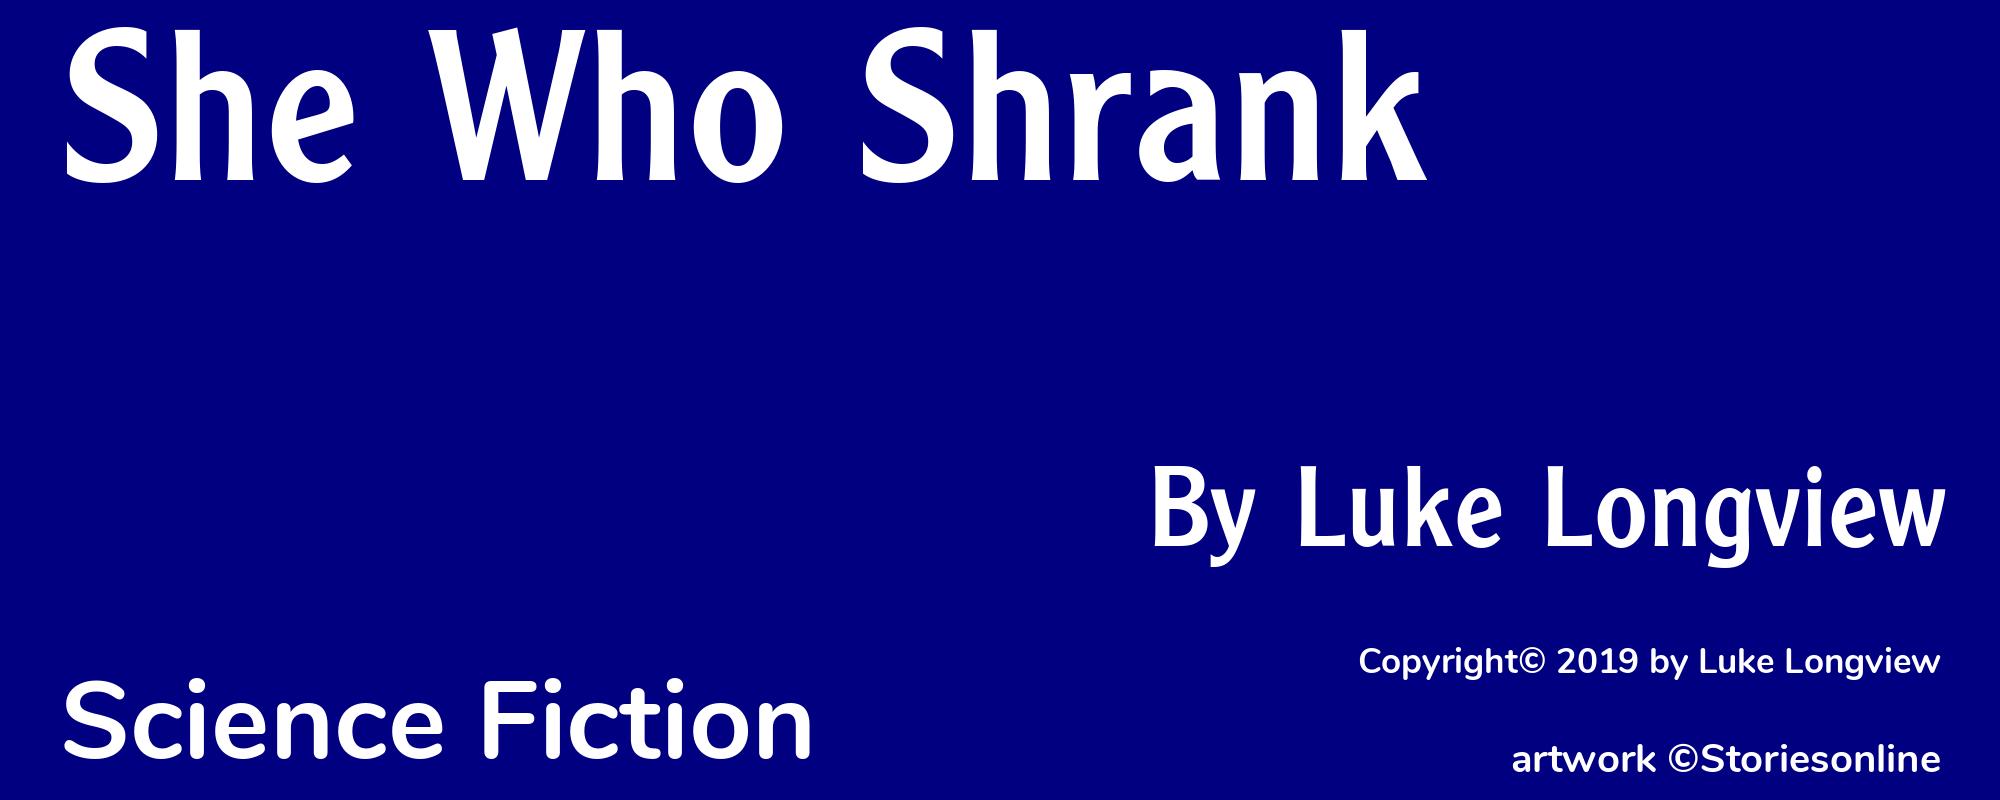 She Who Shrank - Cover